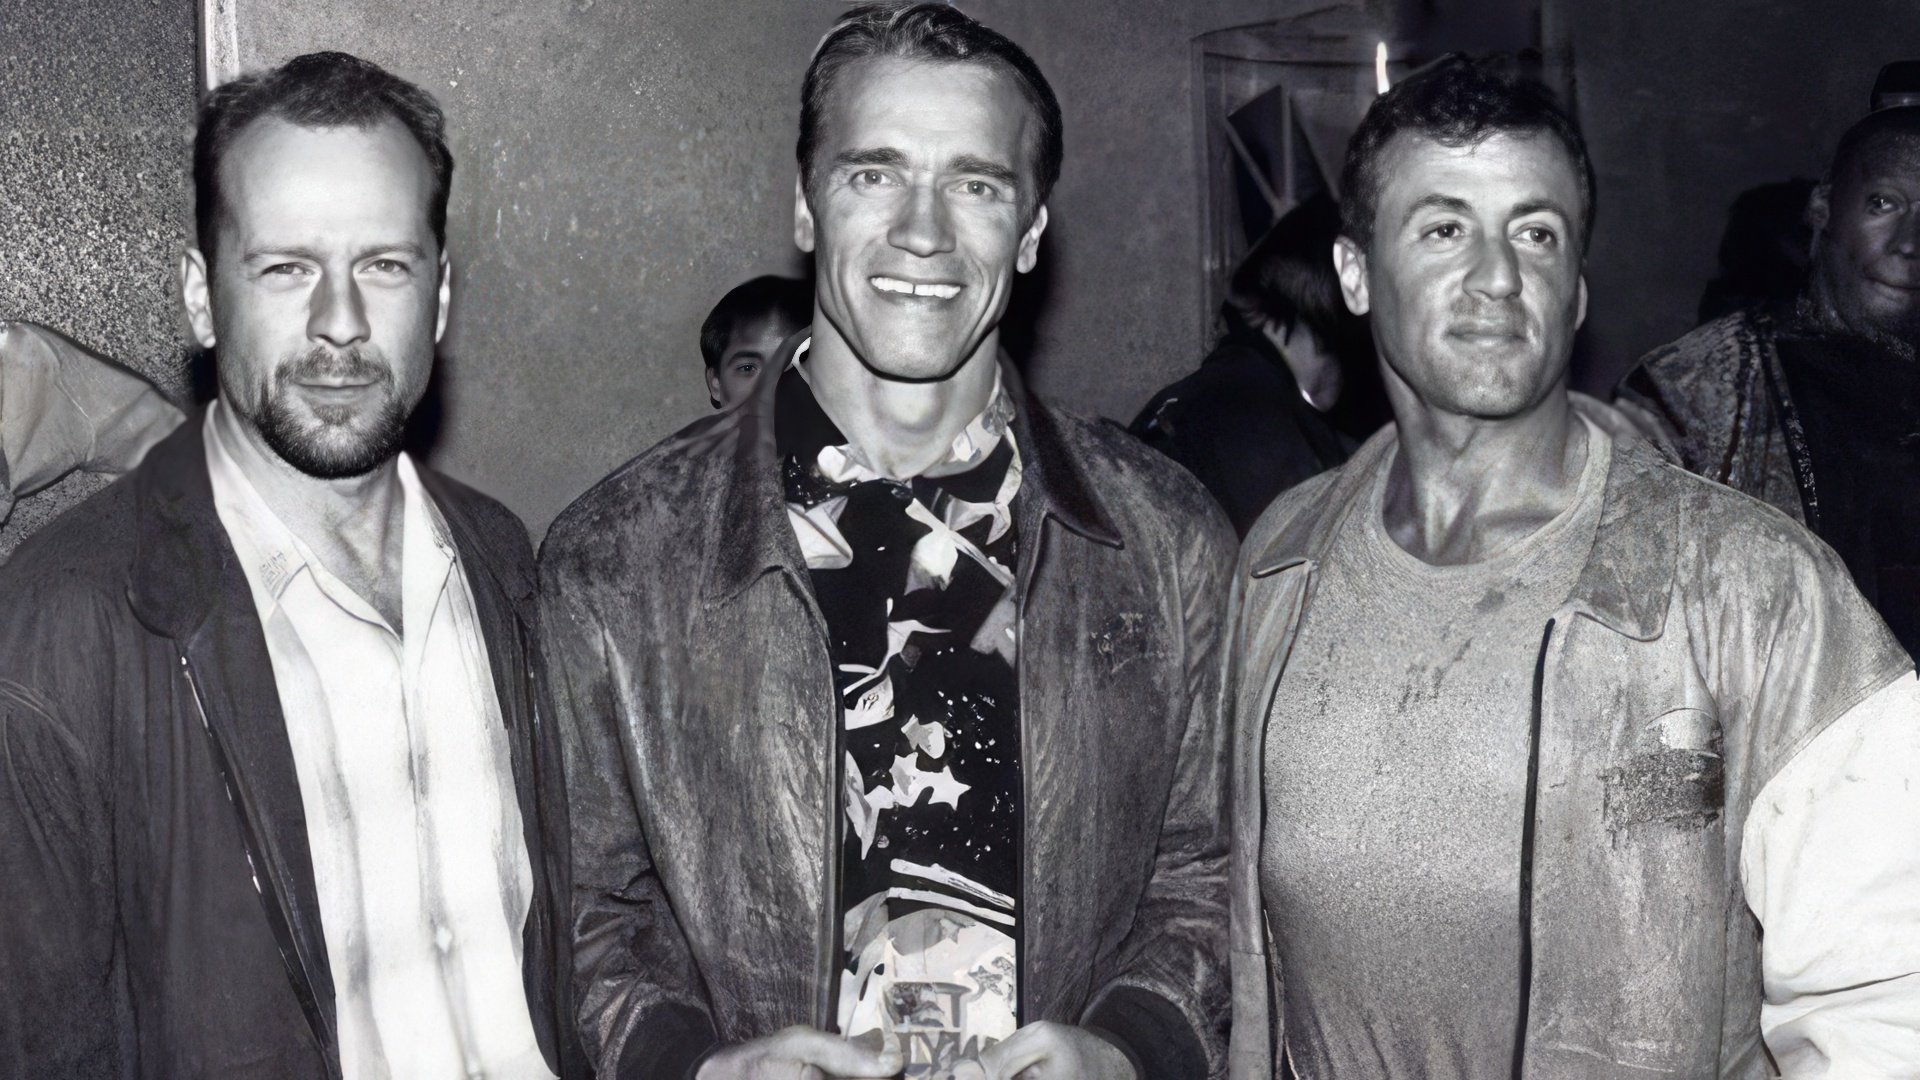 A unique photo of Stallone, Schwarzenegger, and Bruce Willis